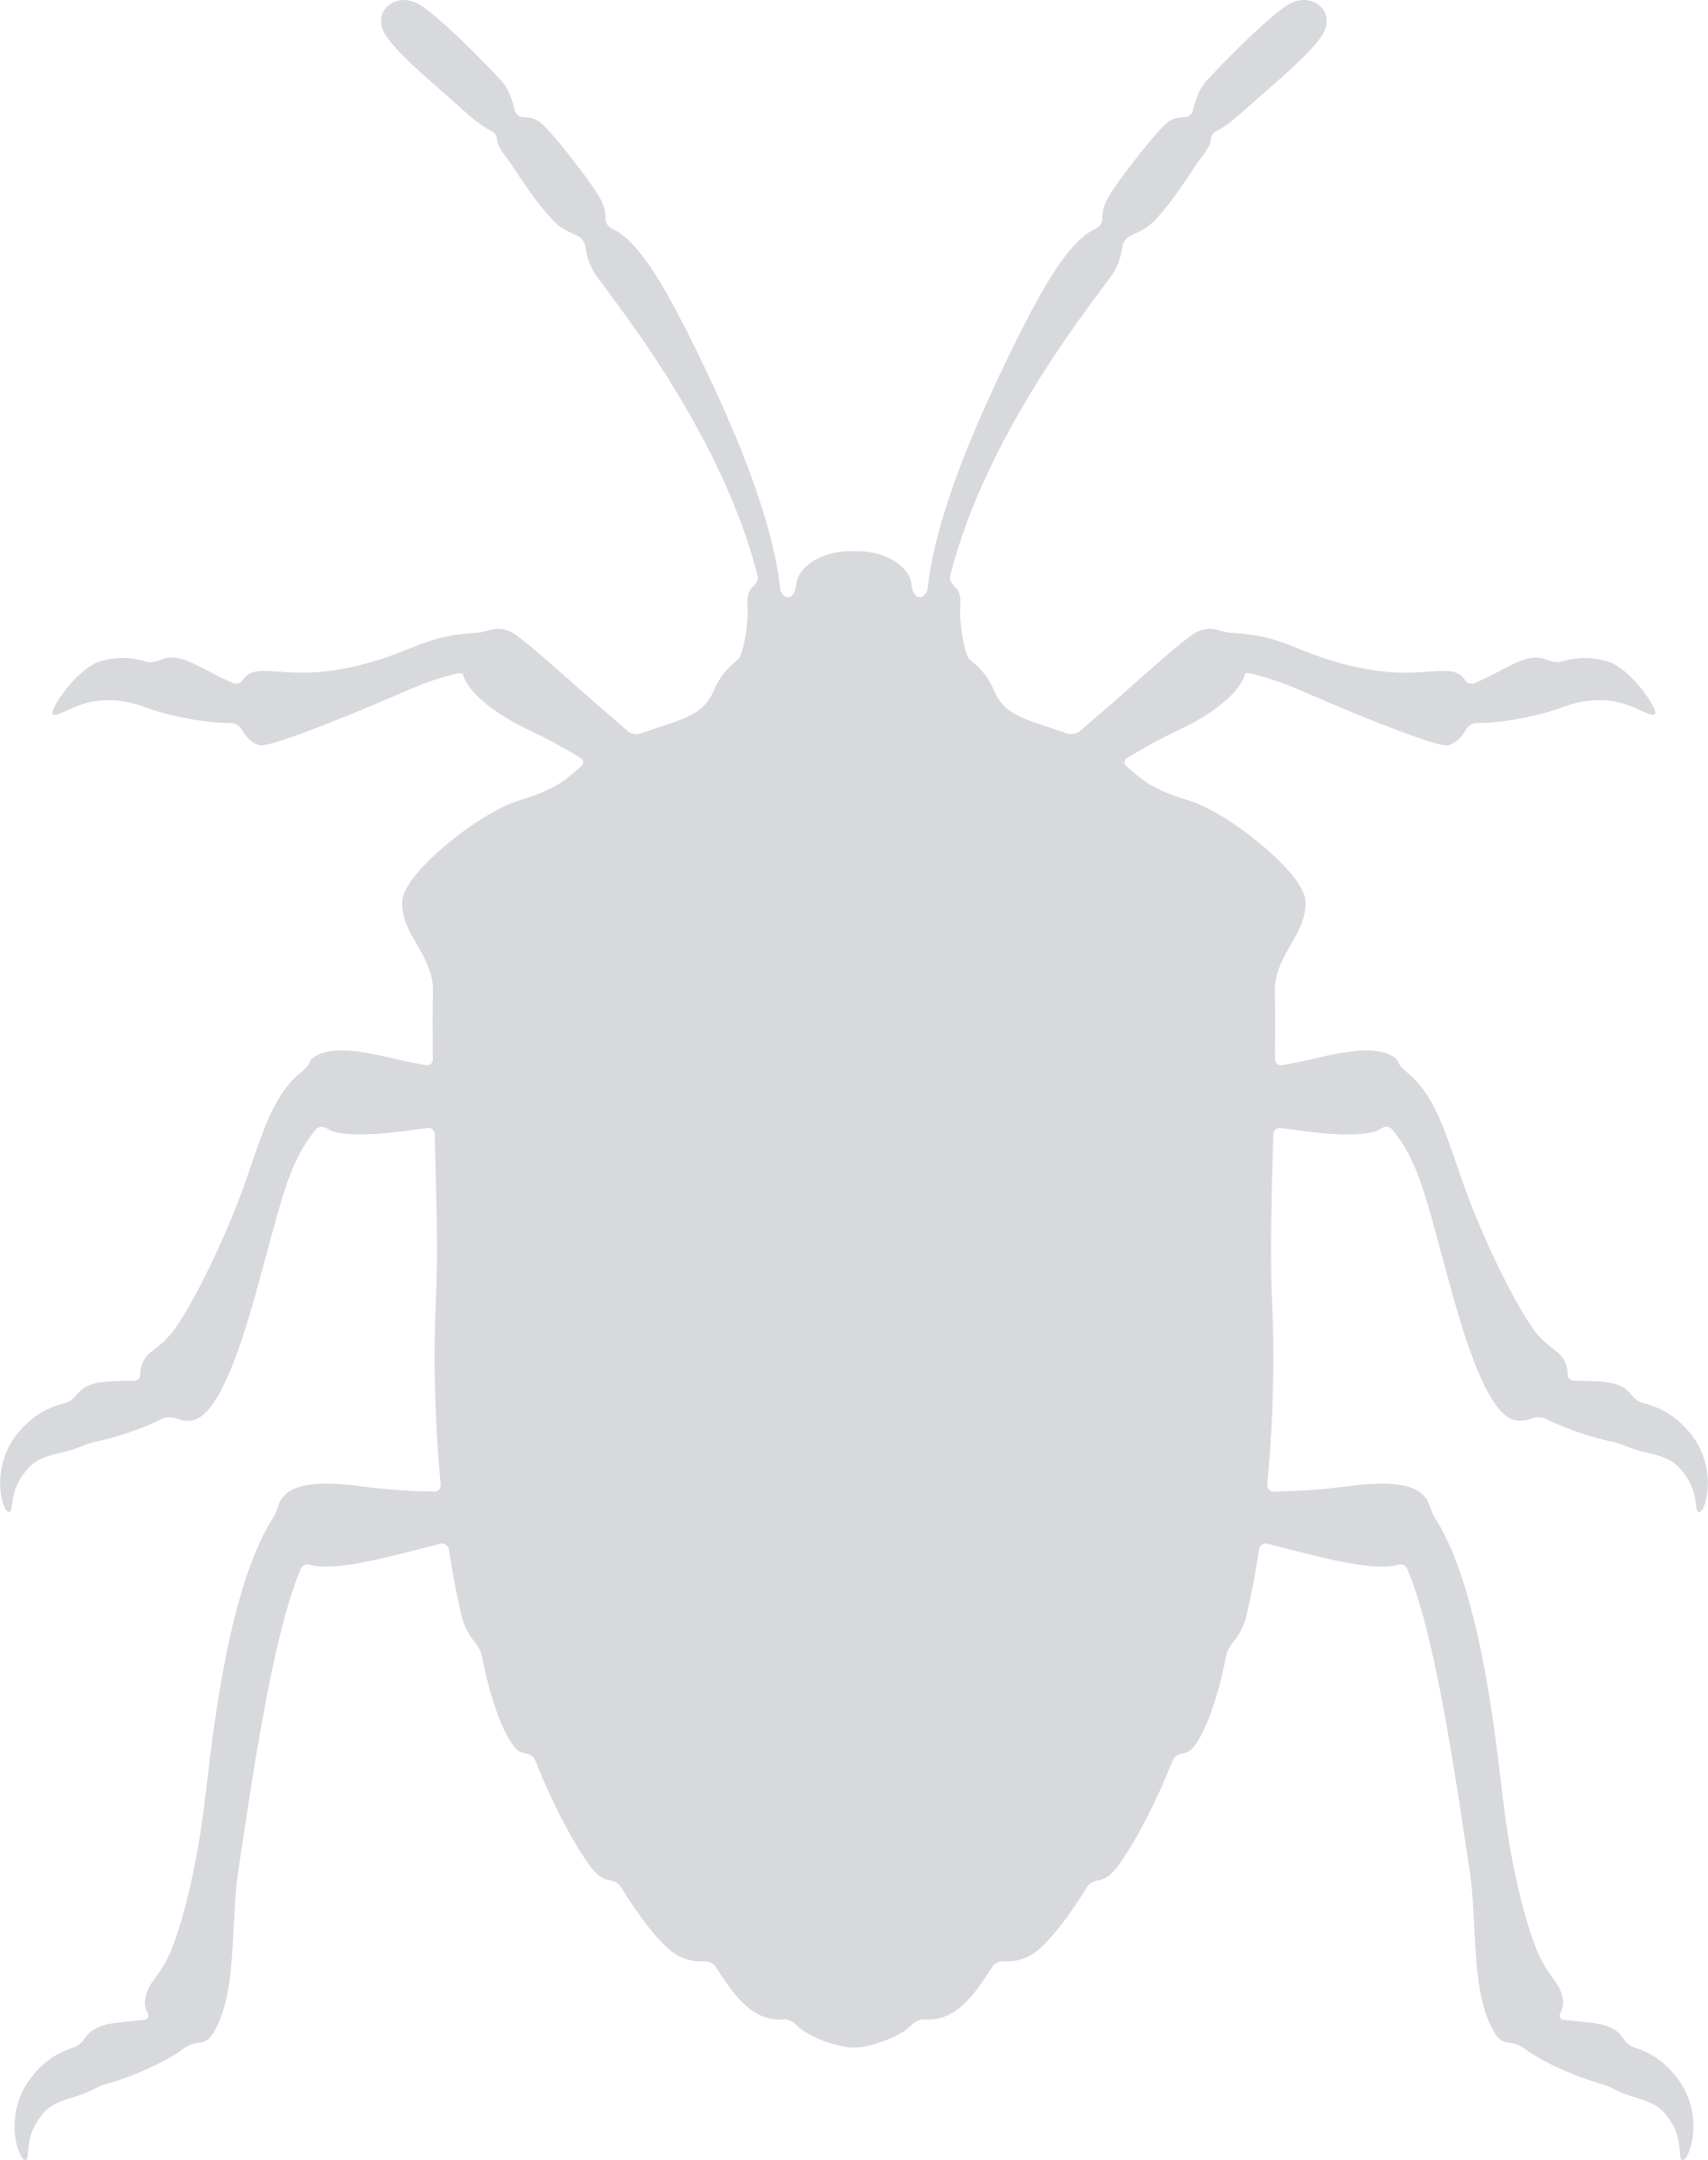 Stink bug big image. Beetle clipart stinkbug